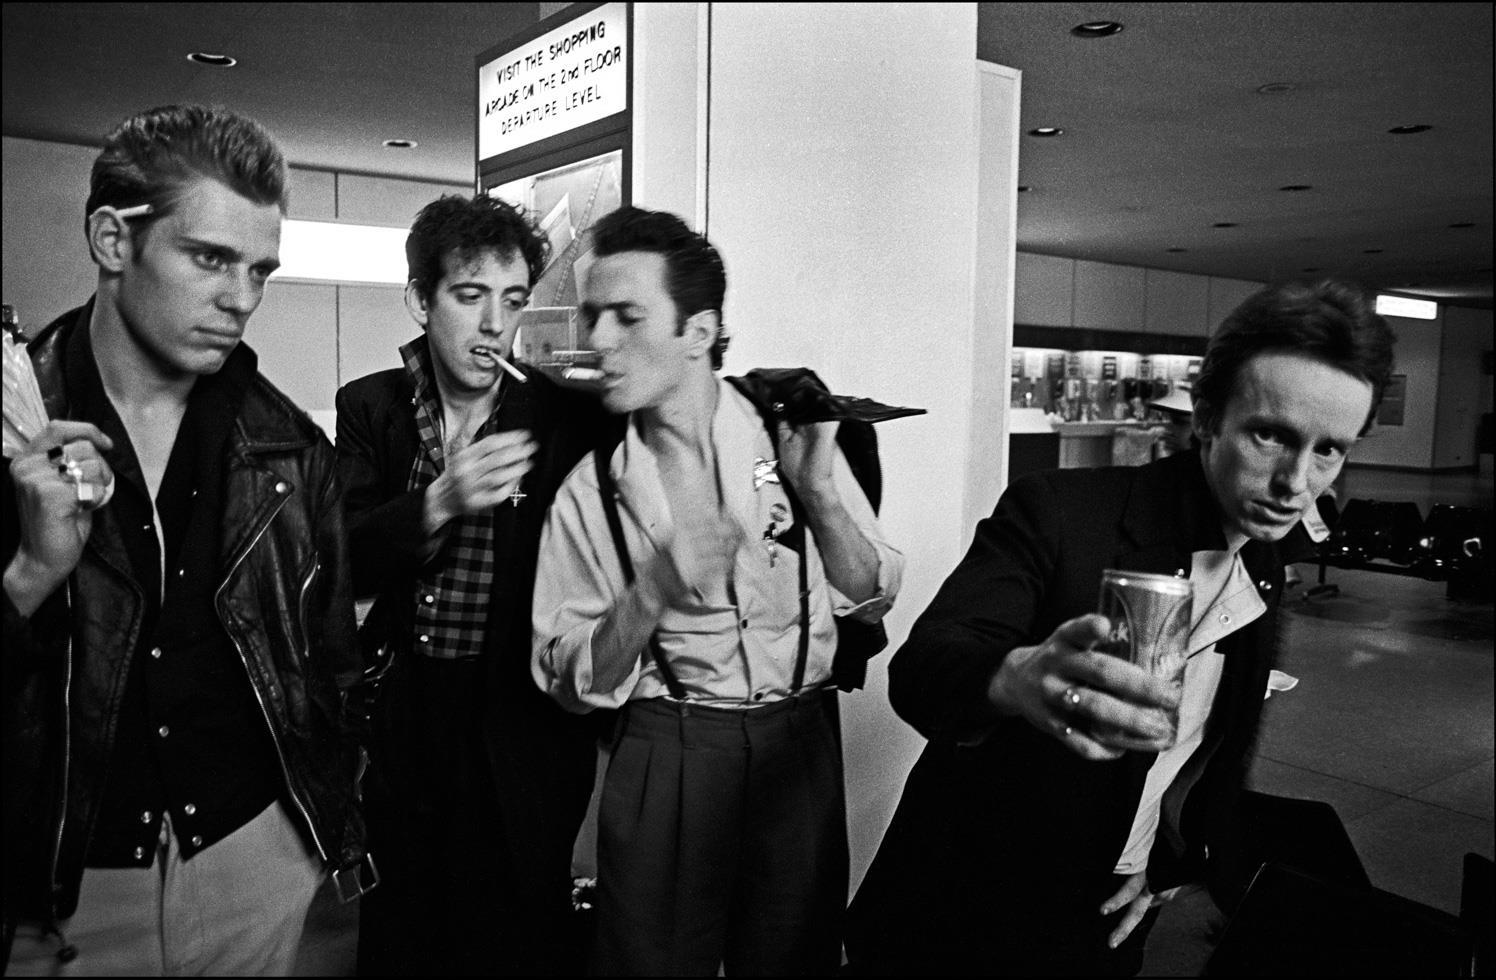 Allan Tannenbaum Black and White Photograph - The Clash, JFK Airport, 1981